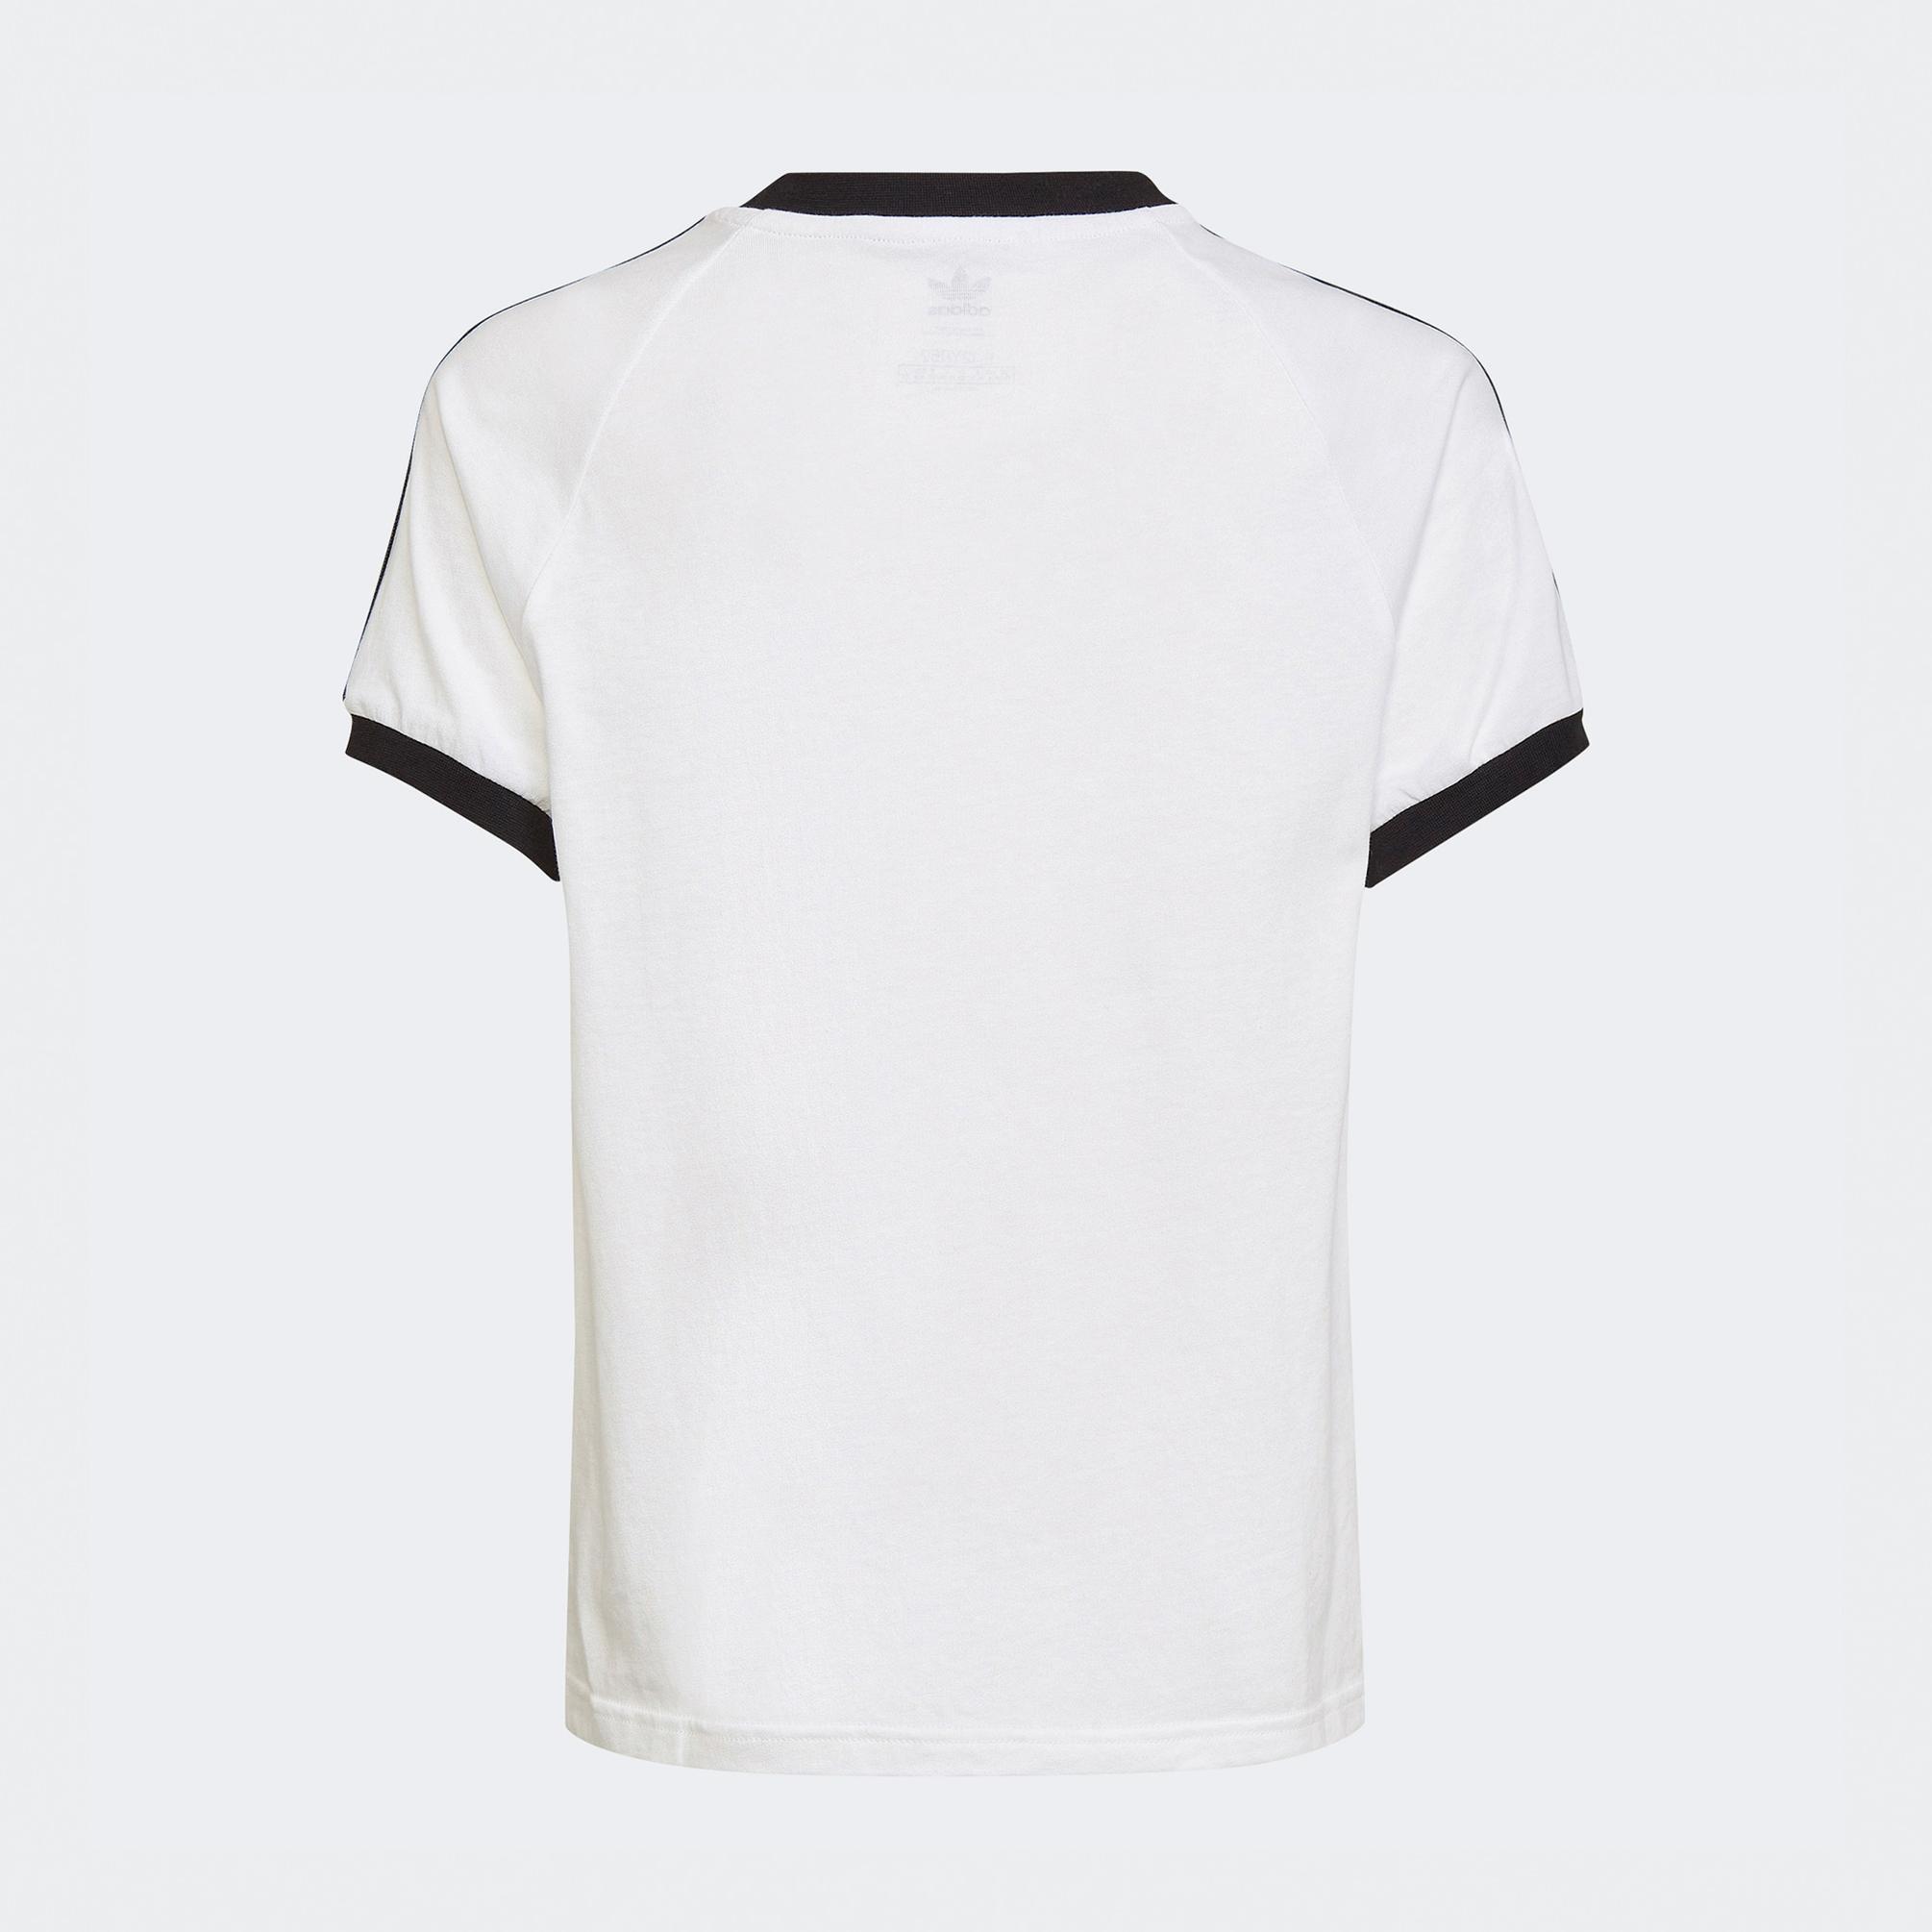  adidas Originals 3Stripes Çocuk Beyaz T-Shirt